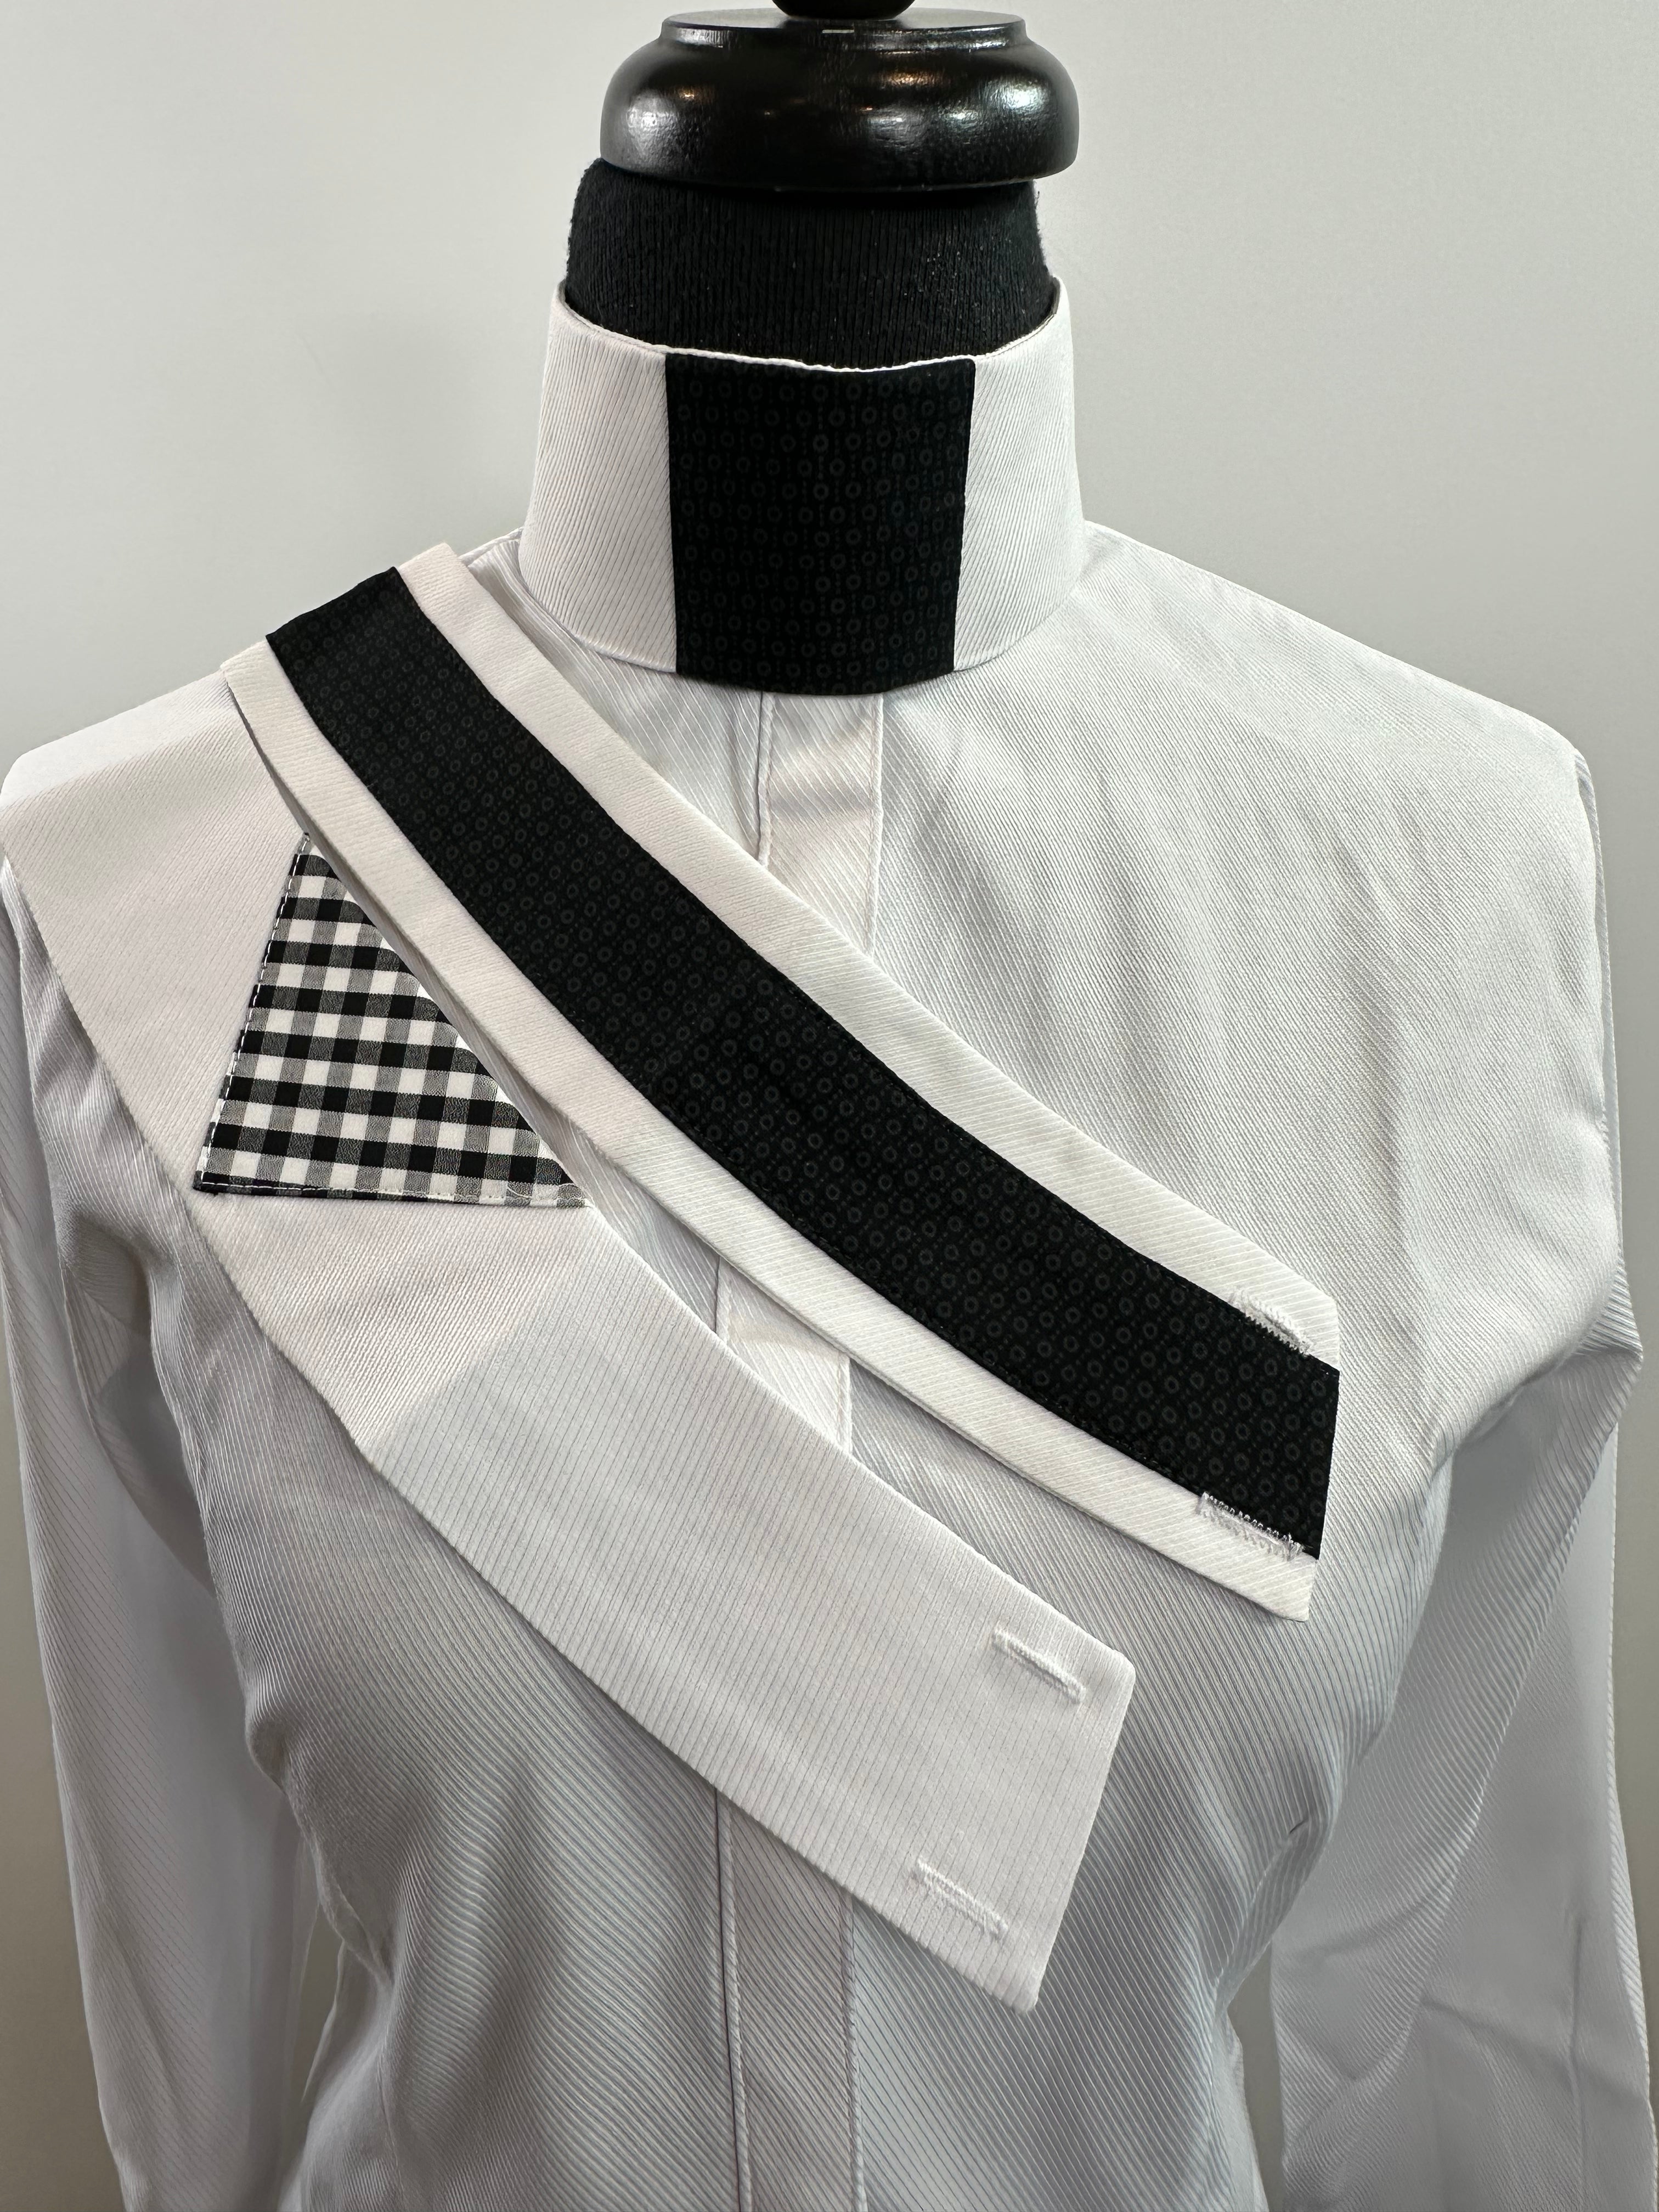 English Show Shirt White Fabric Code 1969